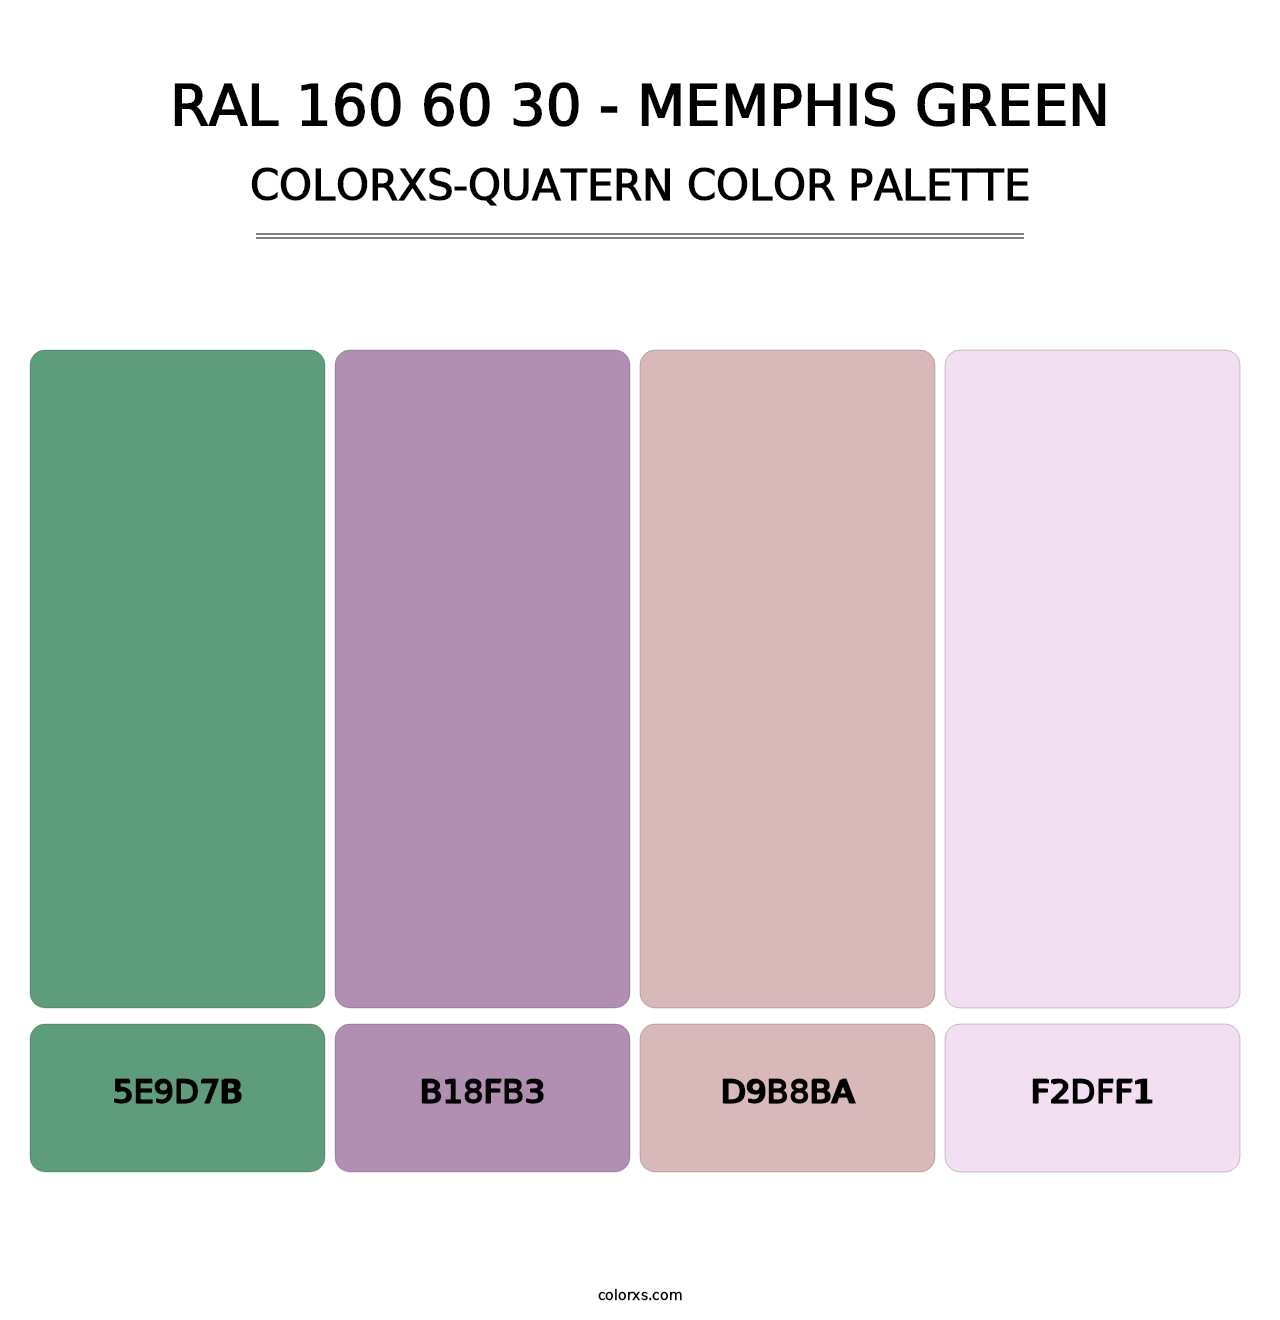 RAL 160 60 30 - Memphis Green - Colorxs Quatern Palette